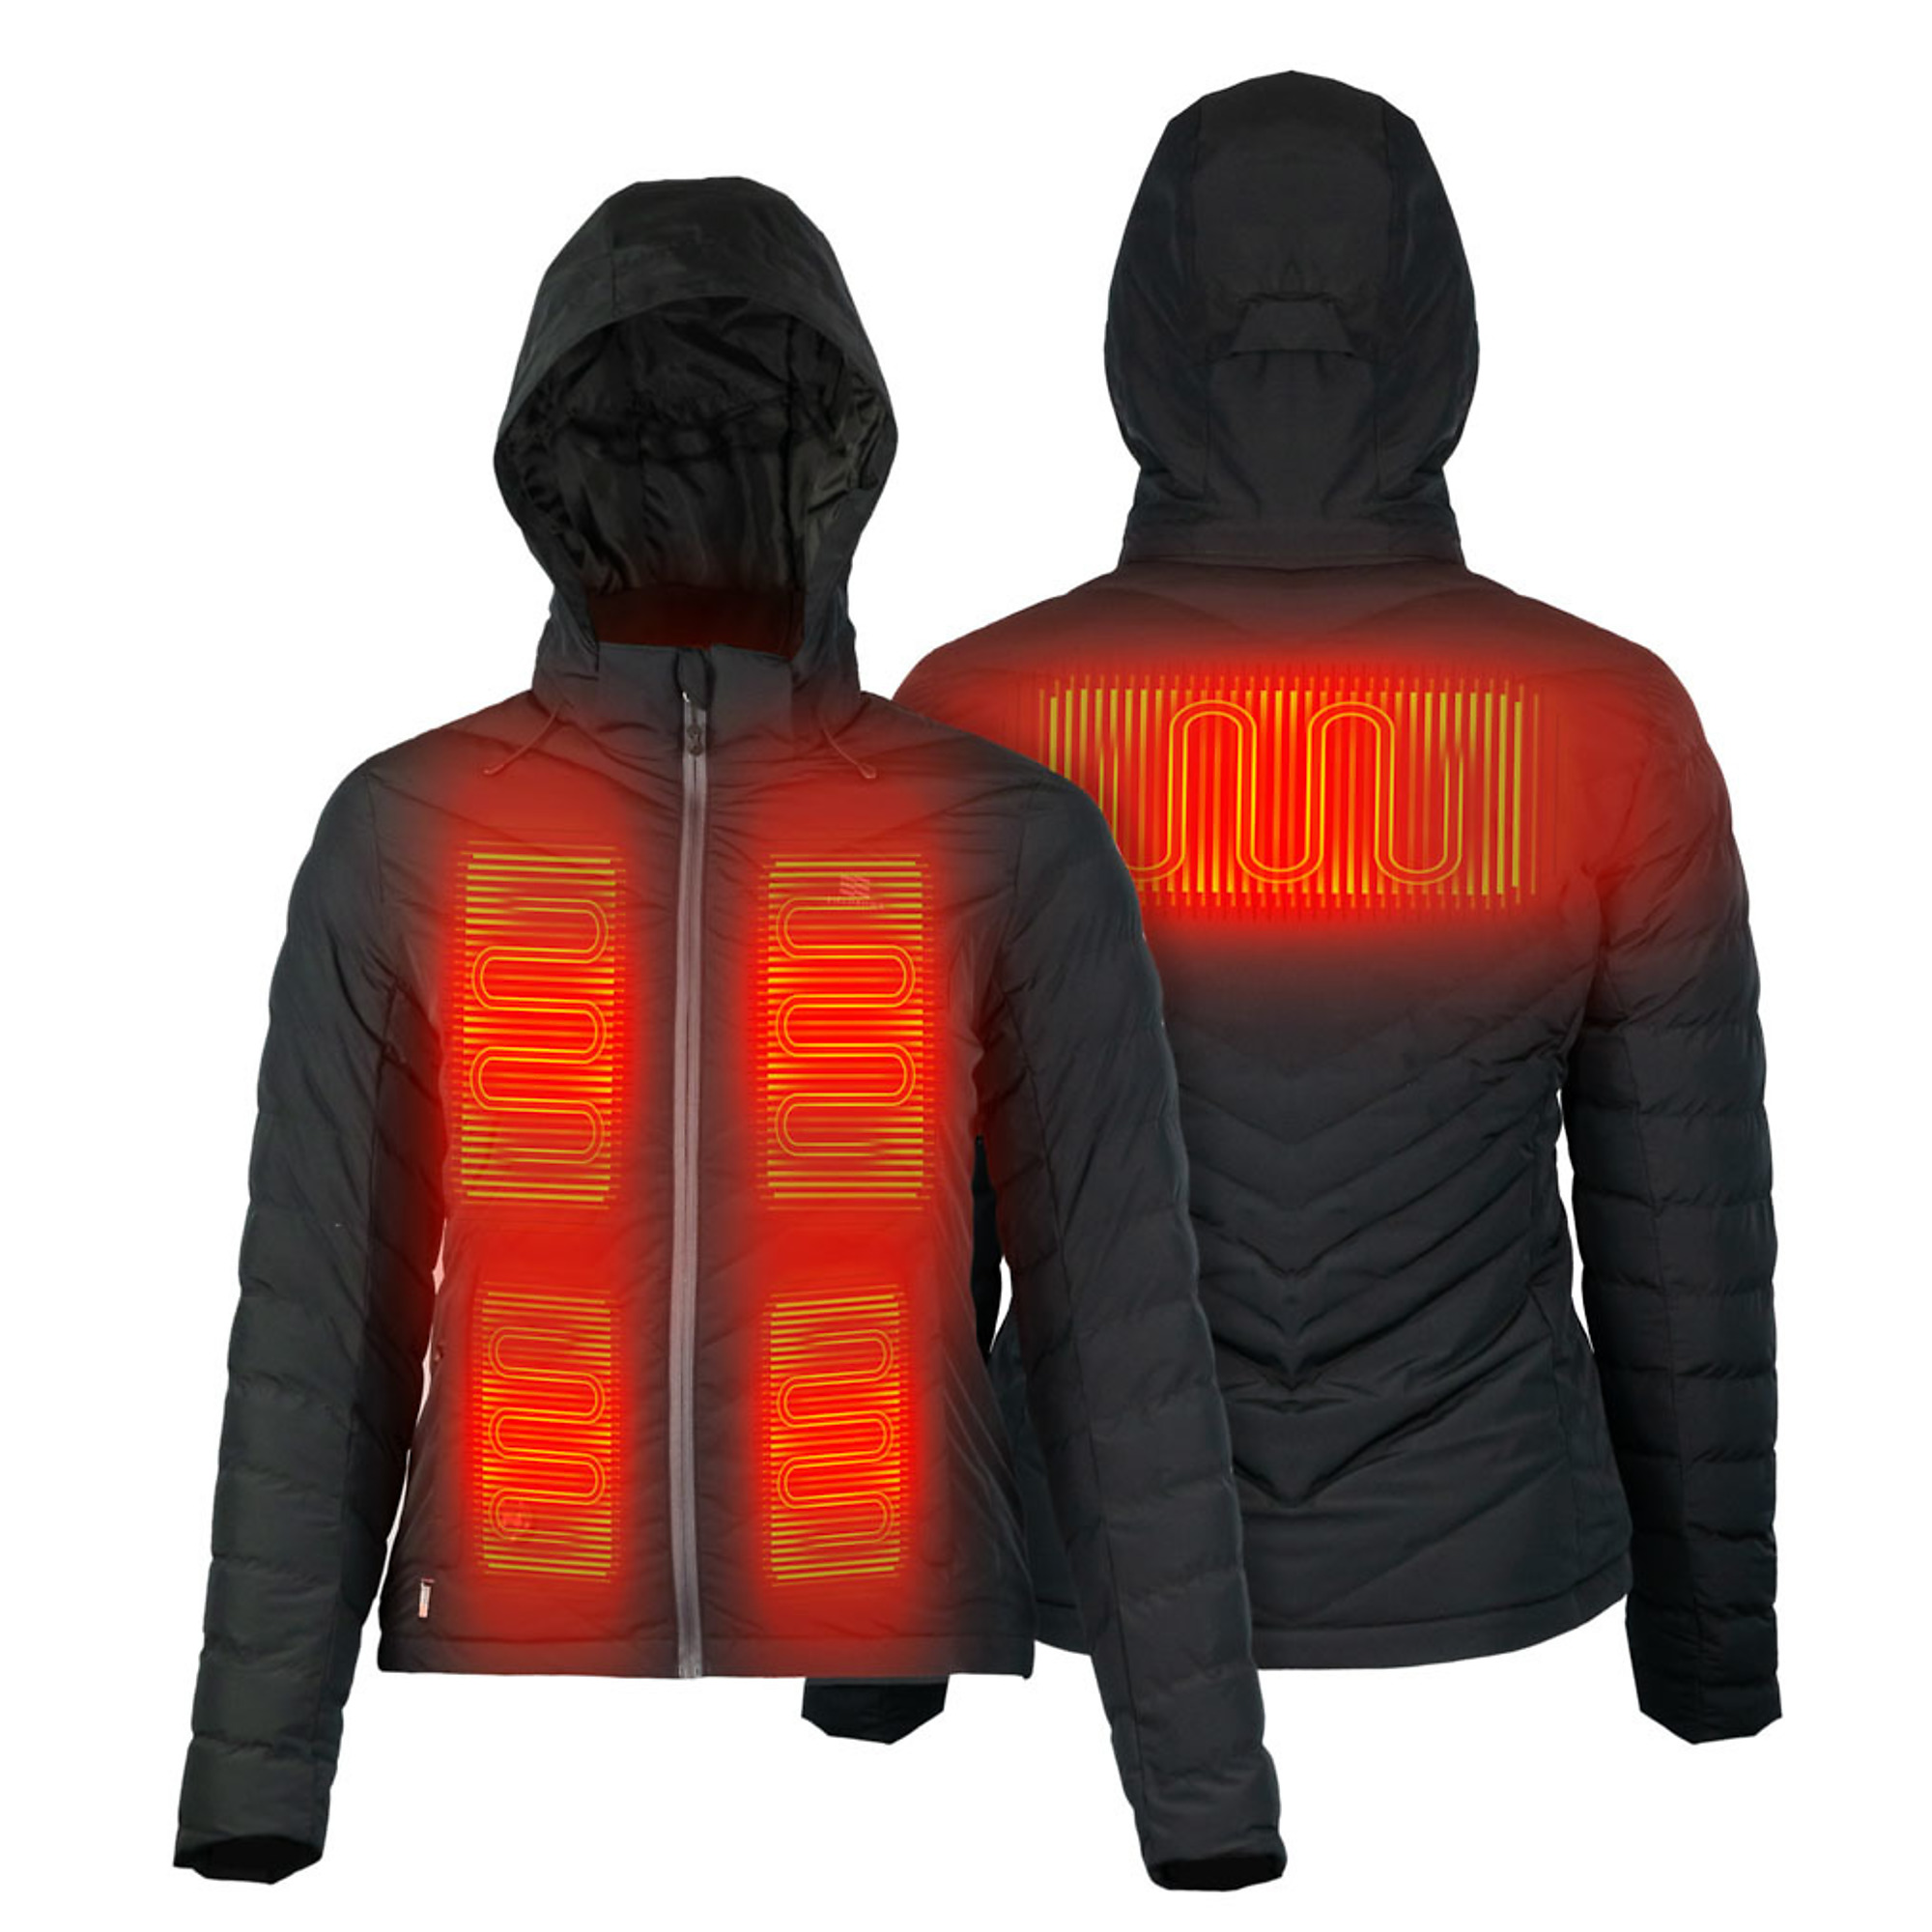 Fieldsheer, Women's Crest Heated Jacket with 7.4v Battery, Size L, Color Black, Model MWWJ39010422